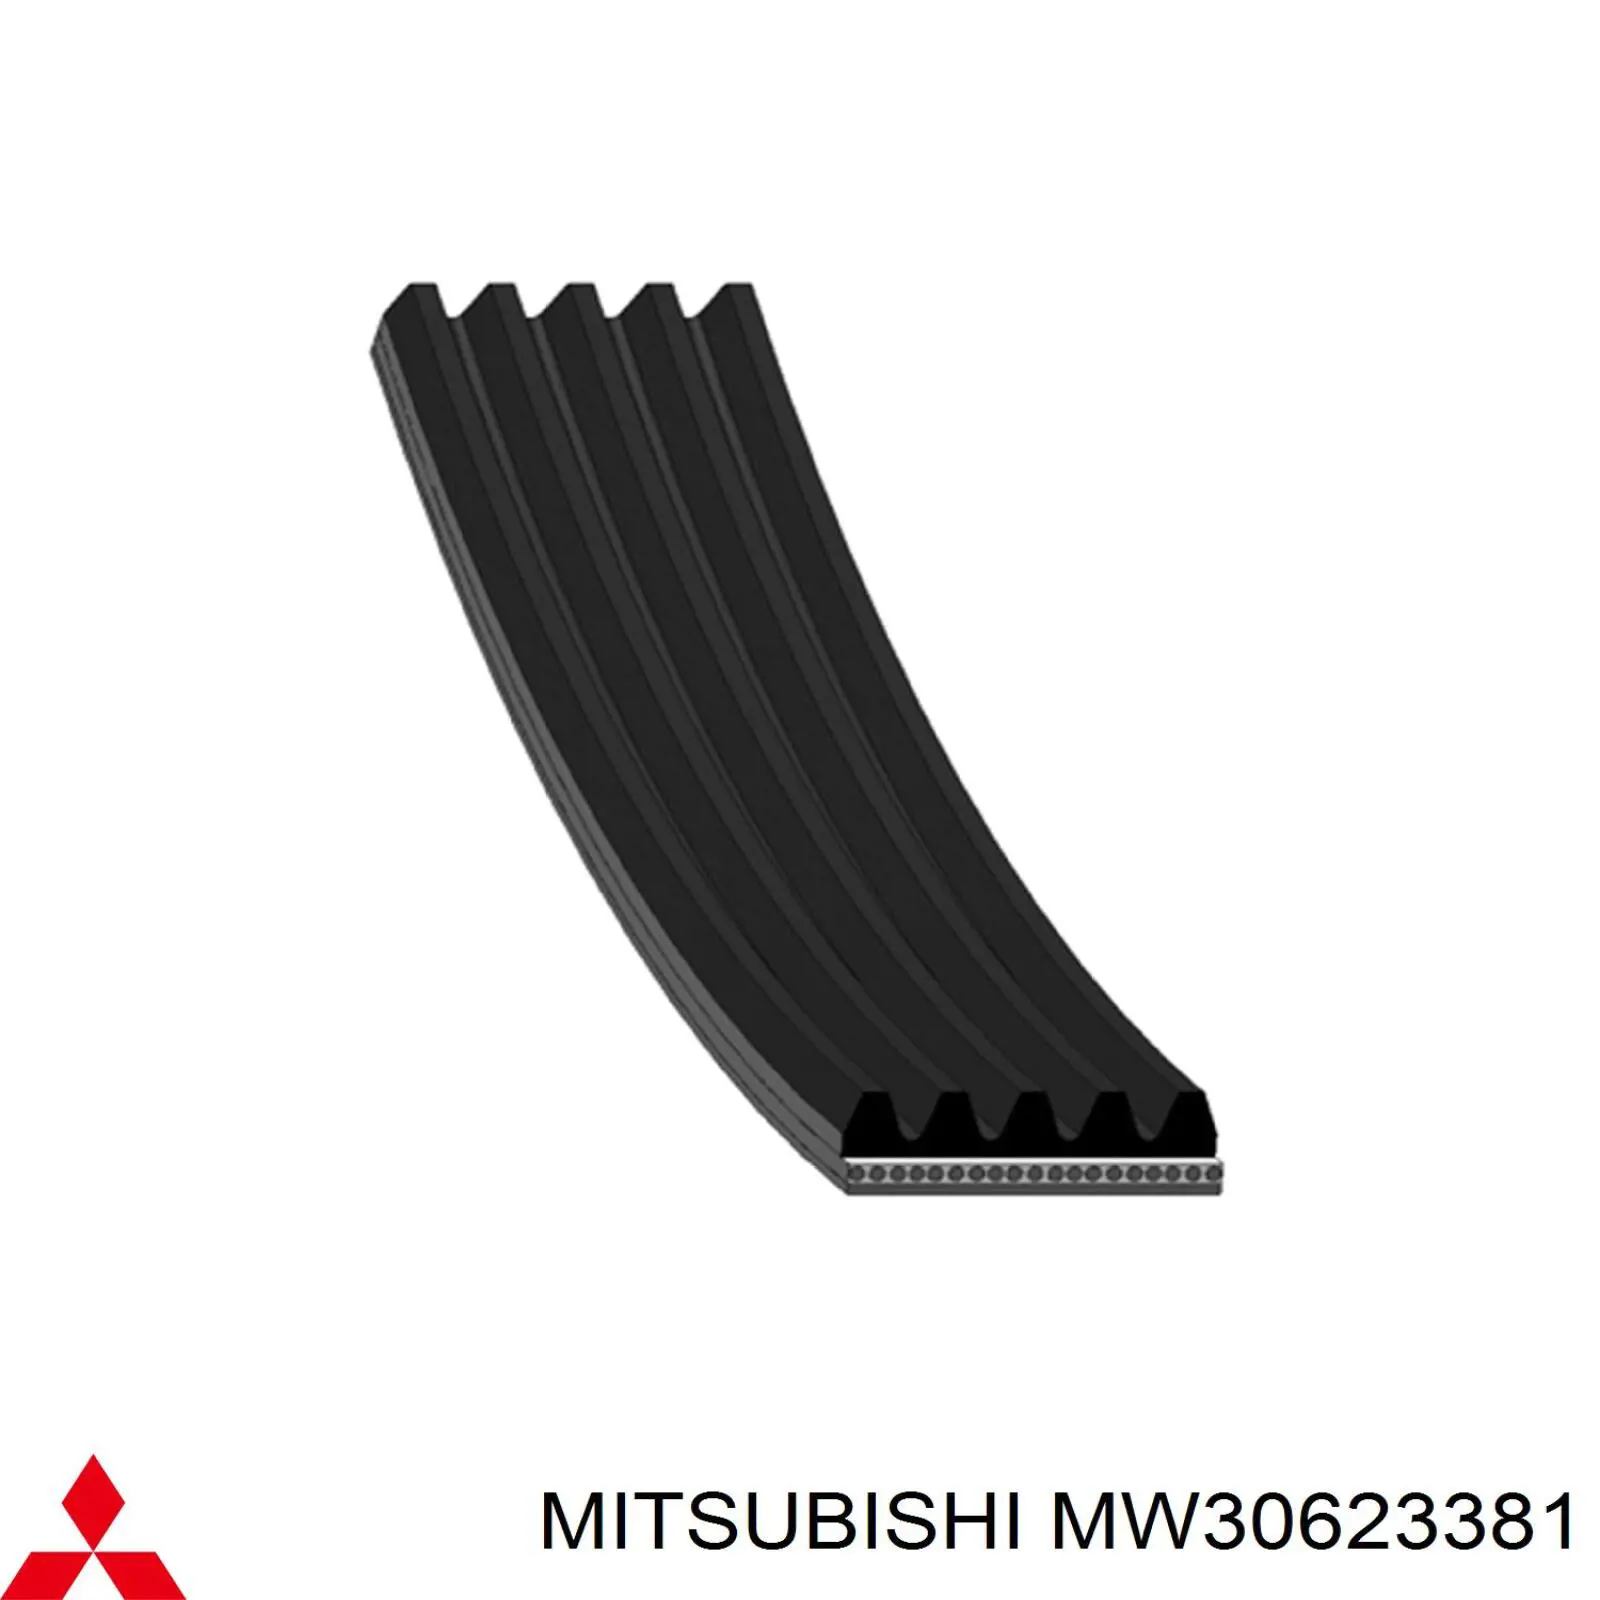 MW30623381 Mitsubishi ремень генератора